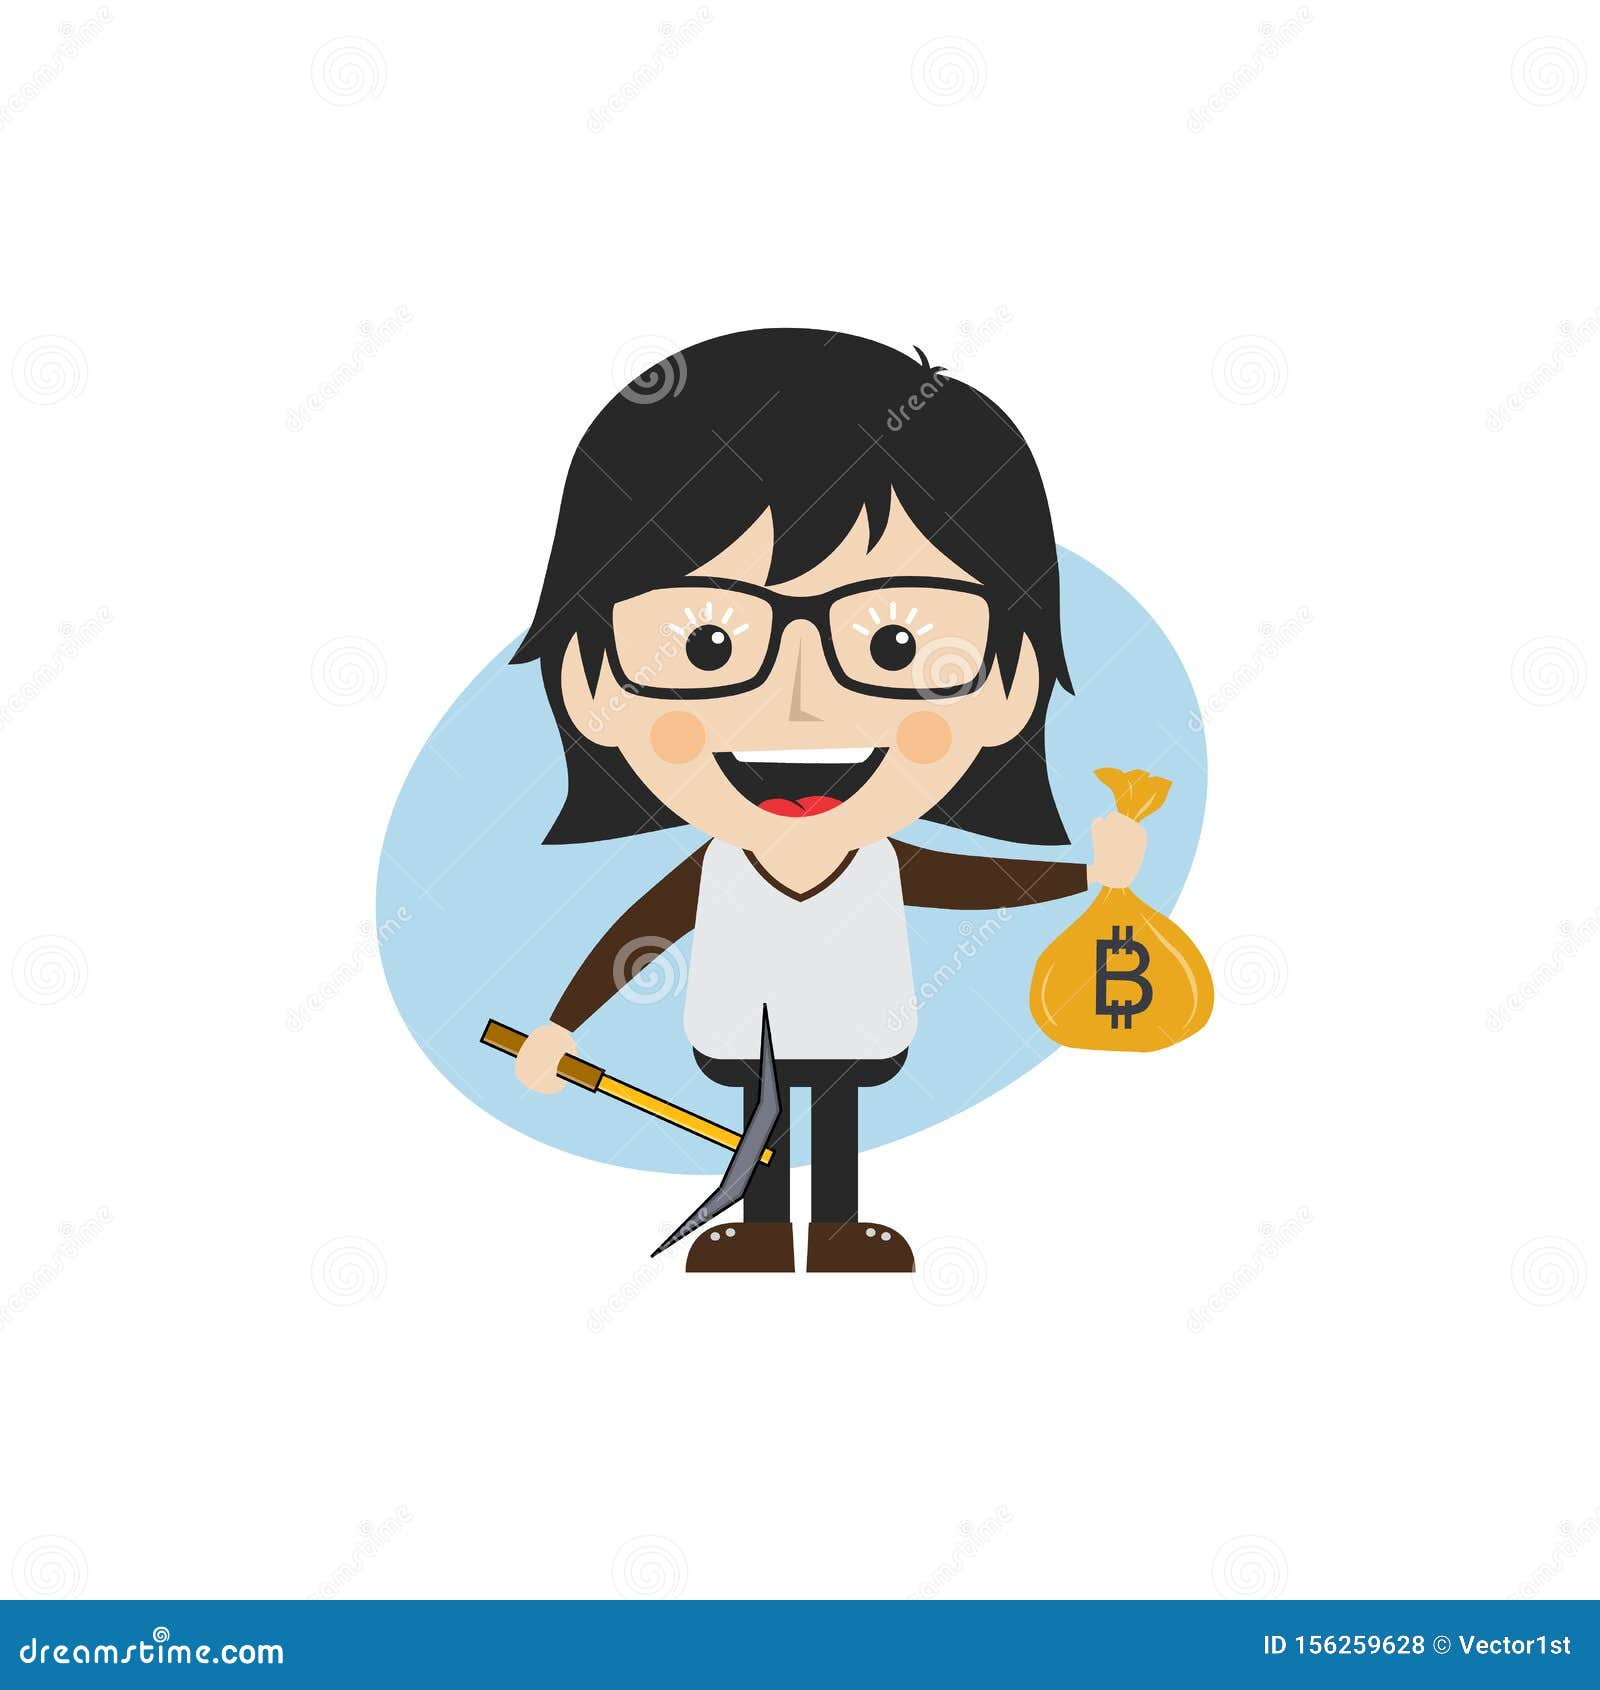 crypto cartoon woman gravator